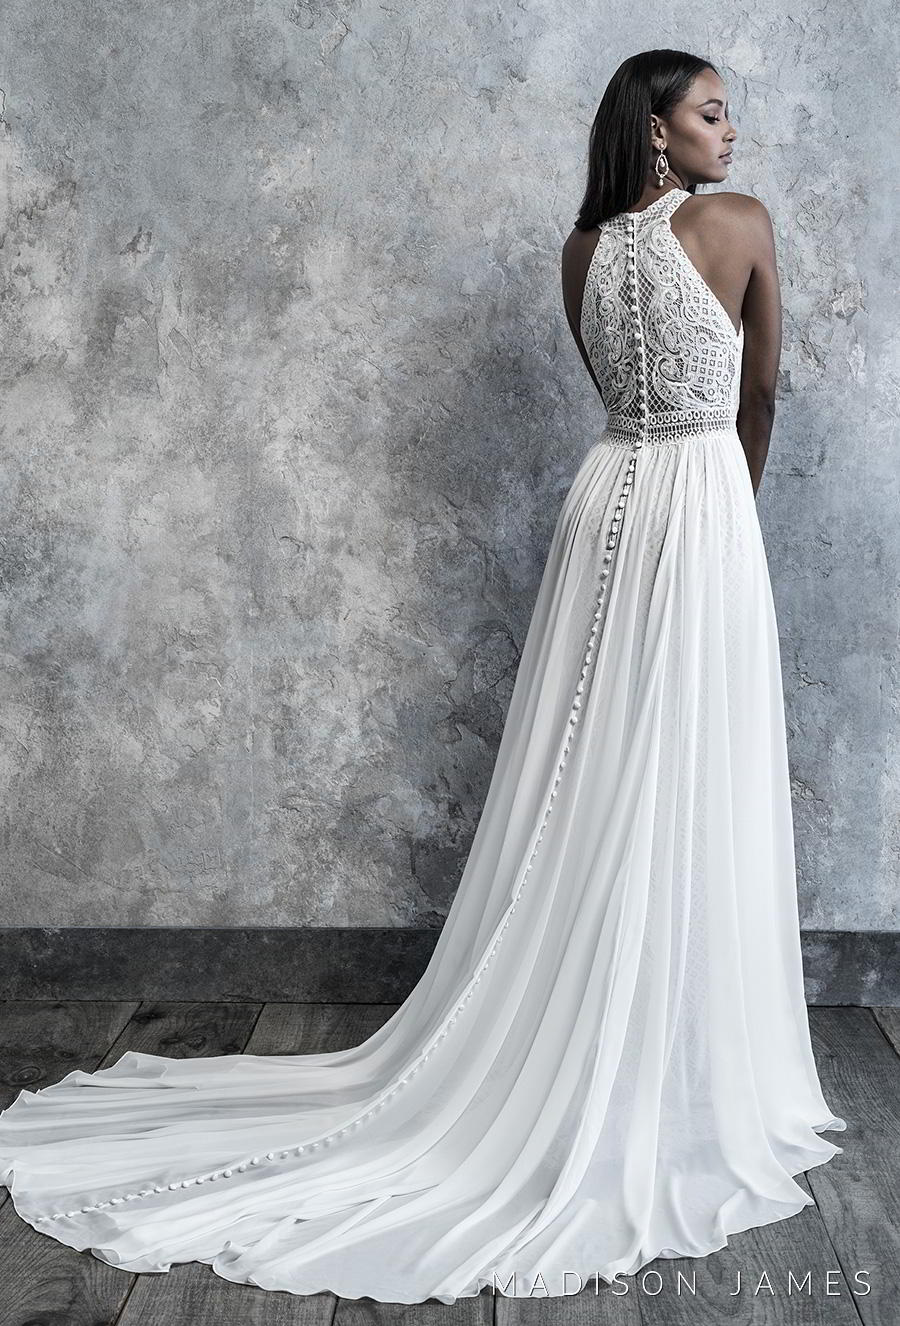 https://www.weddinginspirasi.com/wp-content/uploads/2019/01/madison-james-2019-bridal-sleeveless-halter-neck-full-embellishment-elegant-grecian-sheath-wedding-dress-a-line-overskirt-covered-lace-back-chapel-train-512-bv.jpg